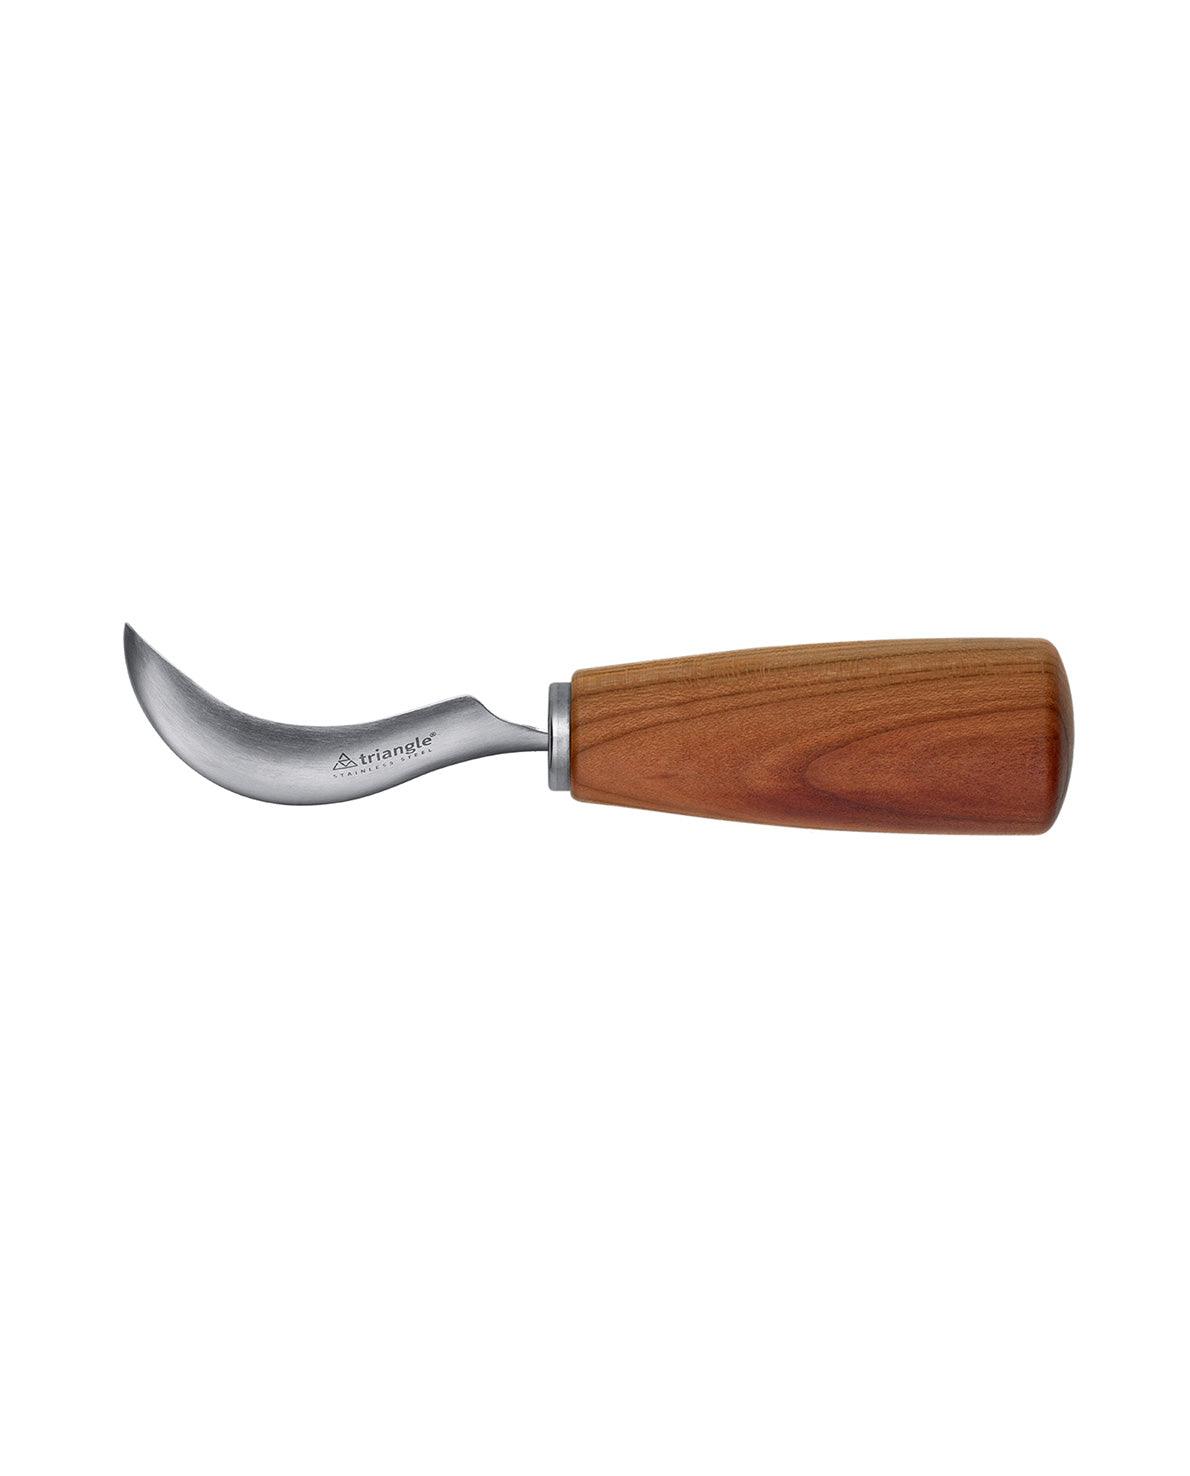 [Triangle] Fruit Spoon PLUM wood, in Gift Box - HANKOOK